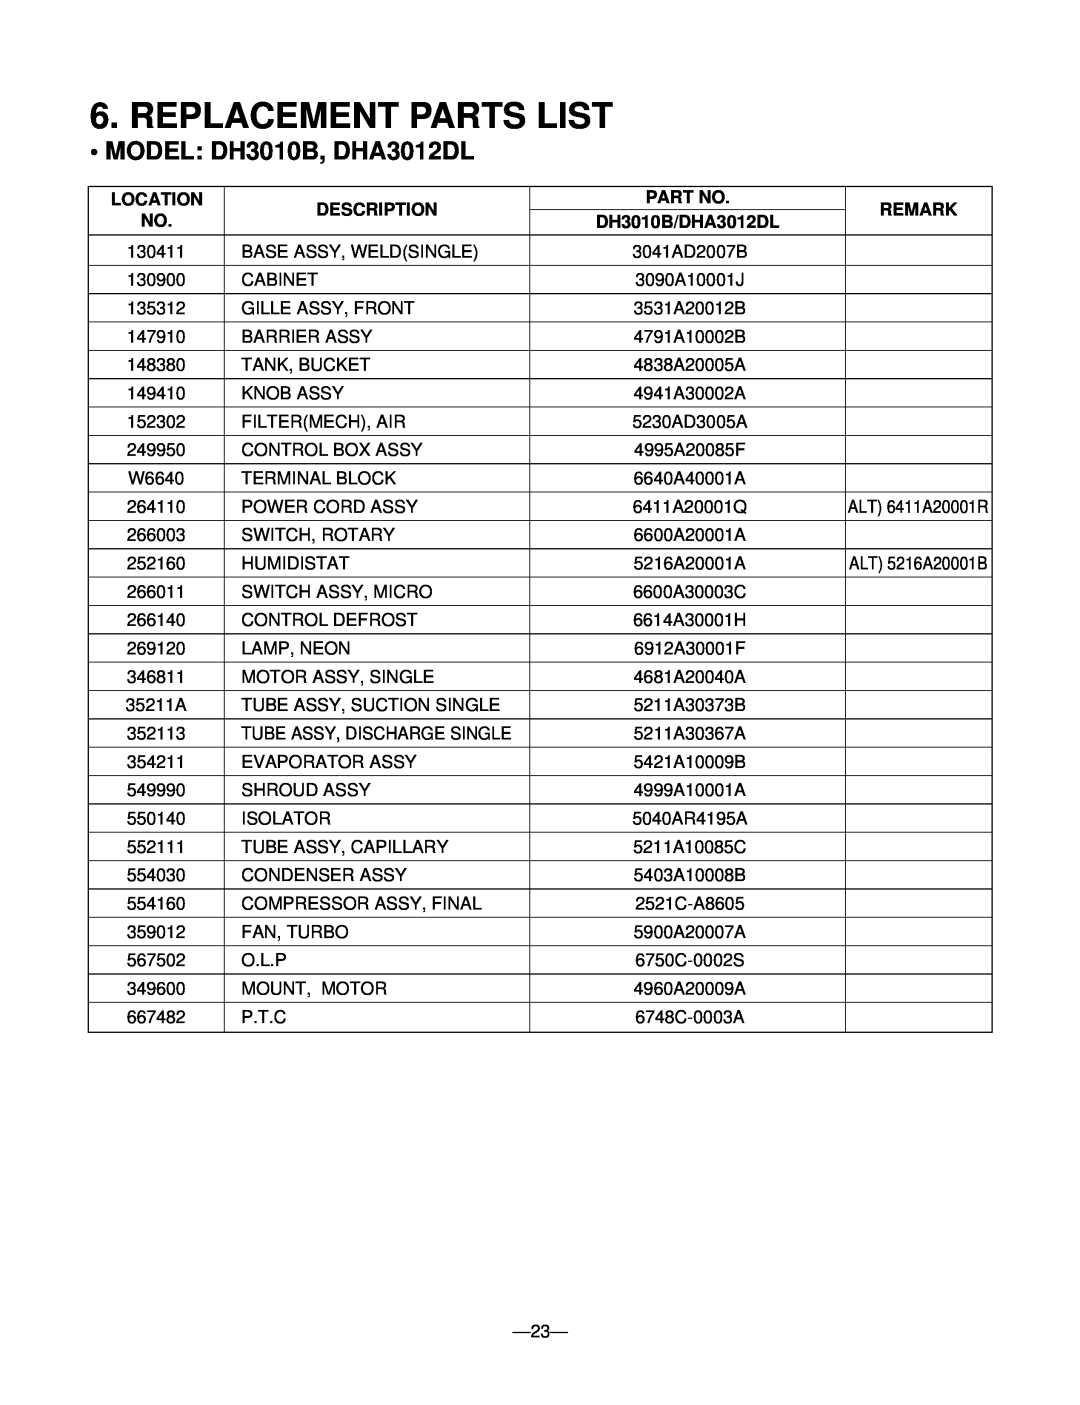 Goldstar DHA4012DL Replacement Parts List, MODEL DH3010B, DHA3012DL, Remark, DH3010B/DHA3012DL, Location, Description 